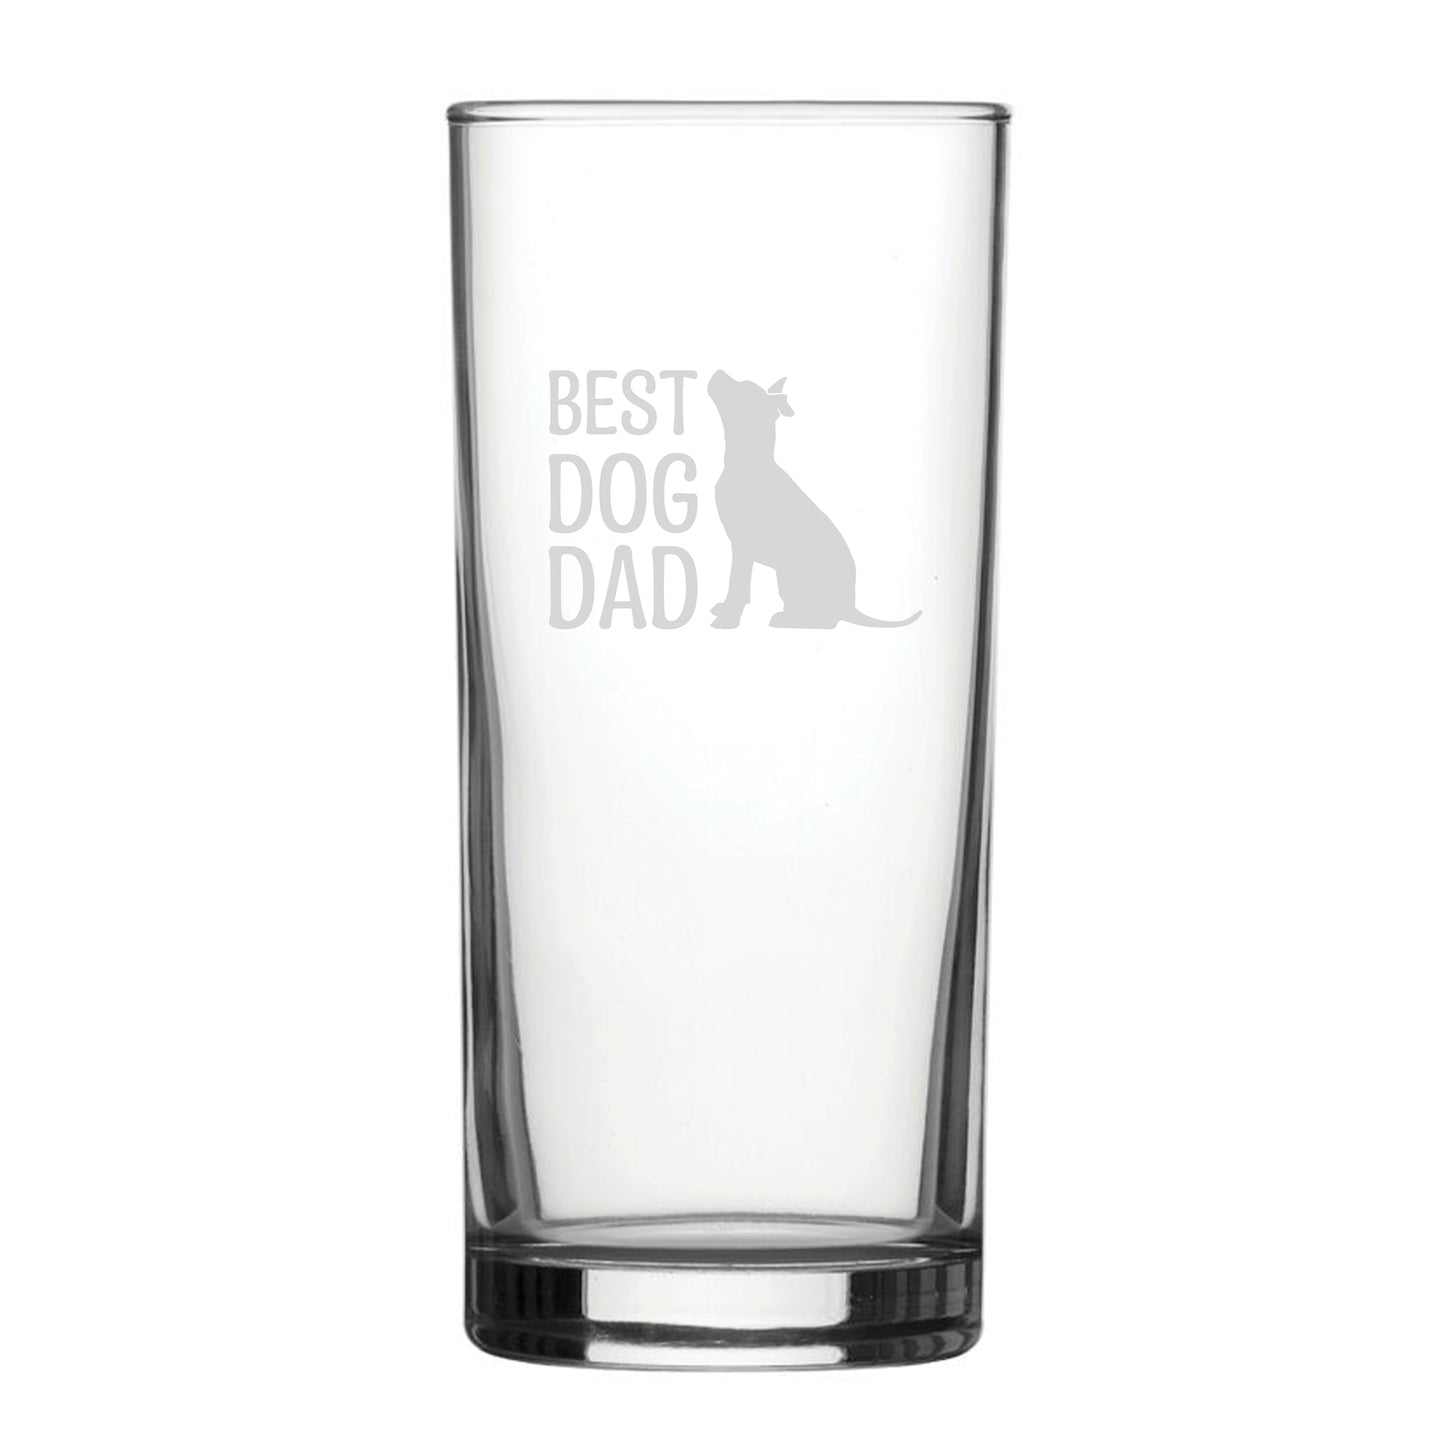 Best Dog Dad - Engraved Novelty Hiball Glass Image 2